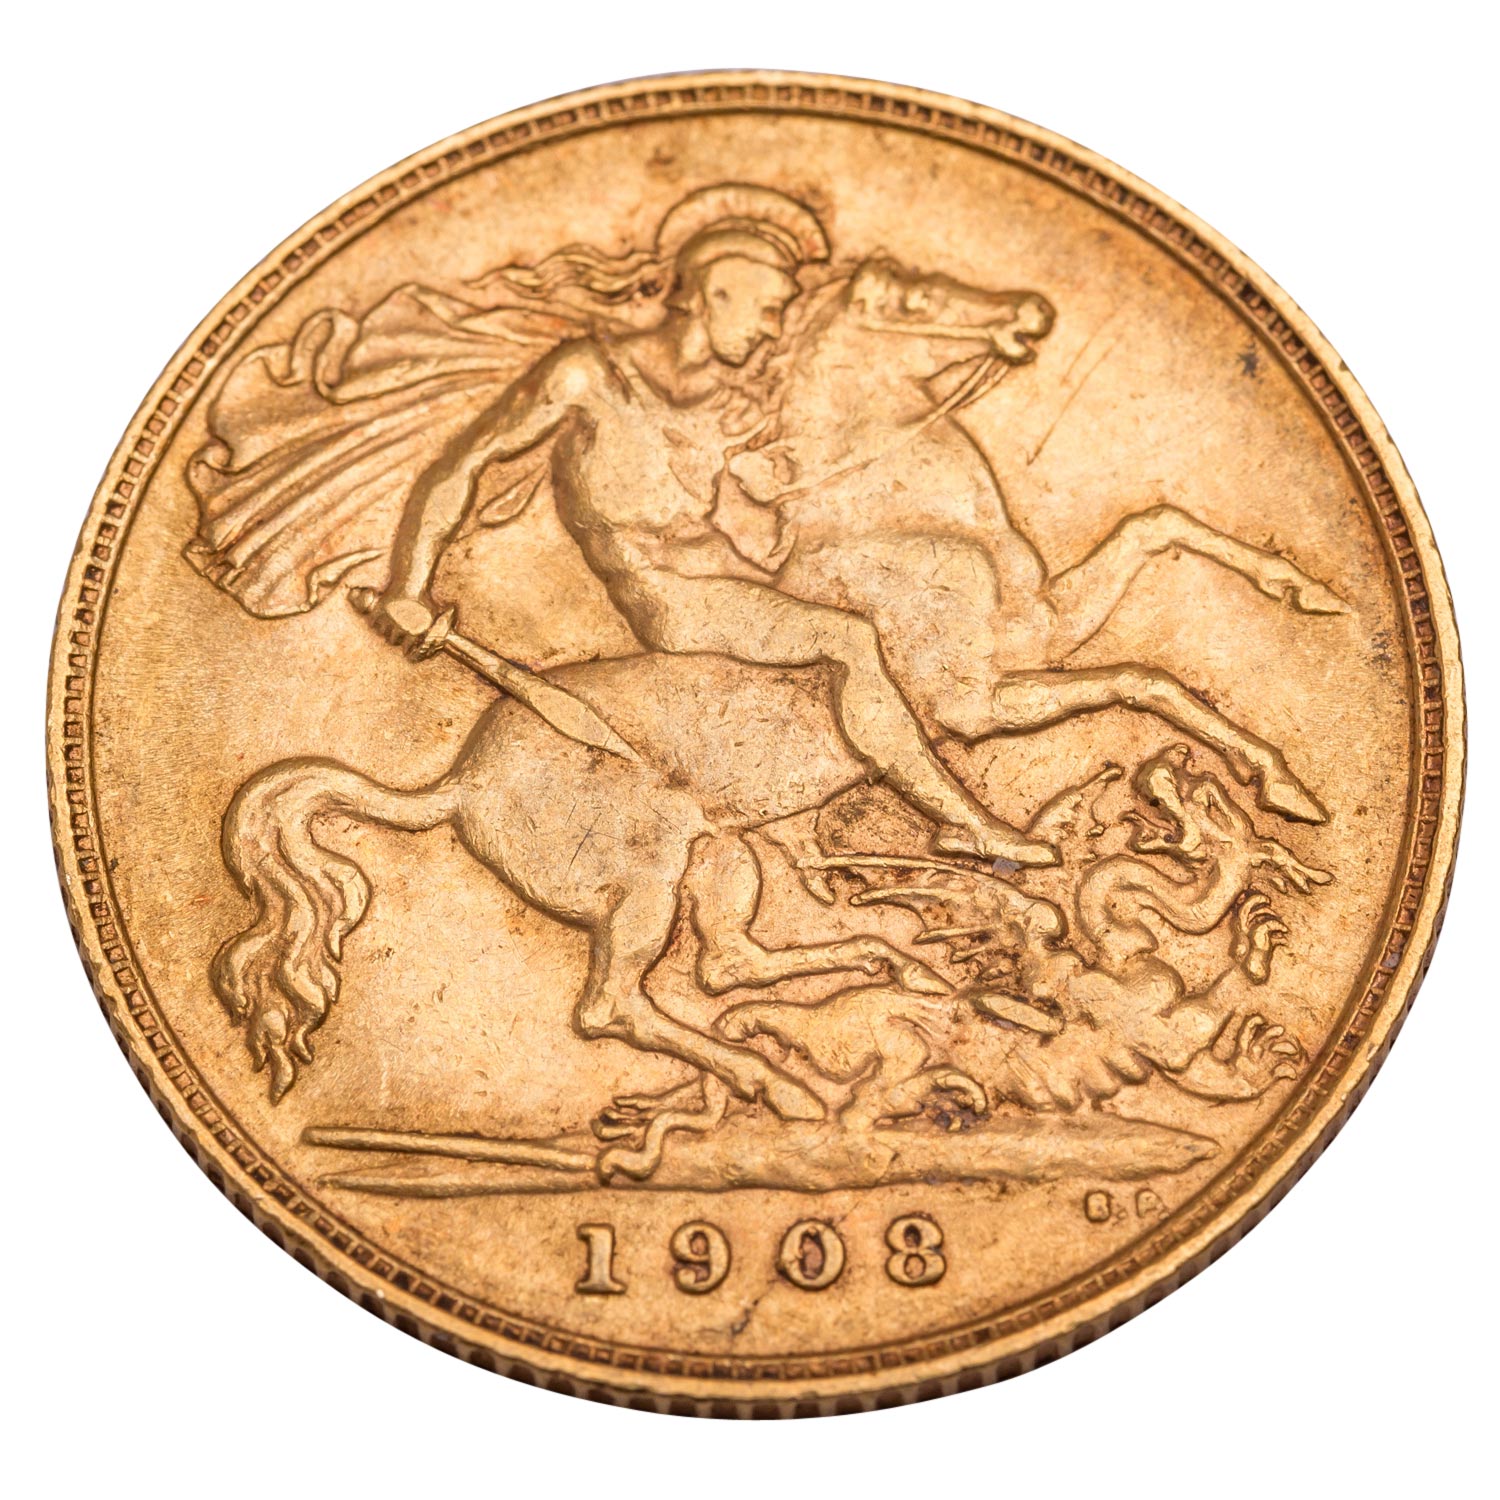 Großbritannien /GOLD - Edward II. 1/2 Sovereign 1908 - Image 2 of 2